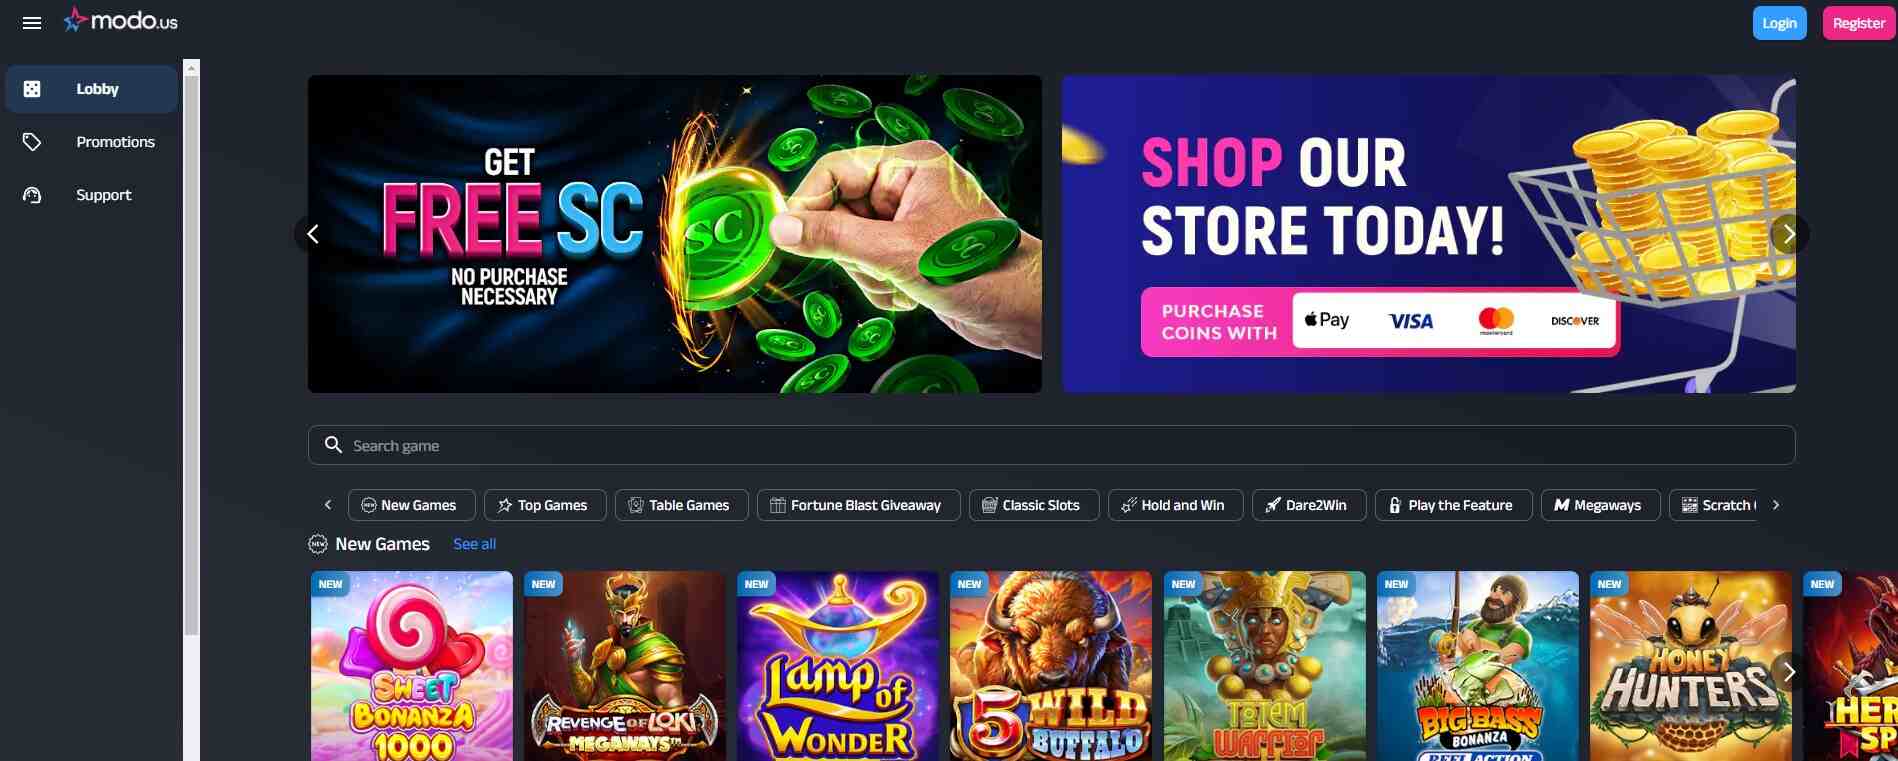 Modo Us Casino Homepage Image